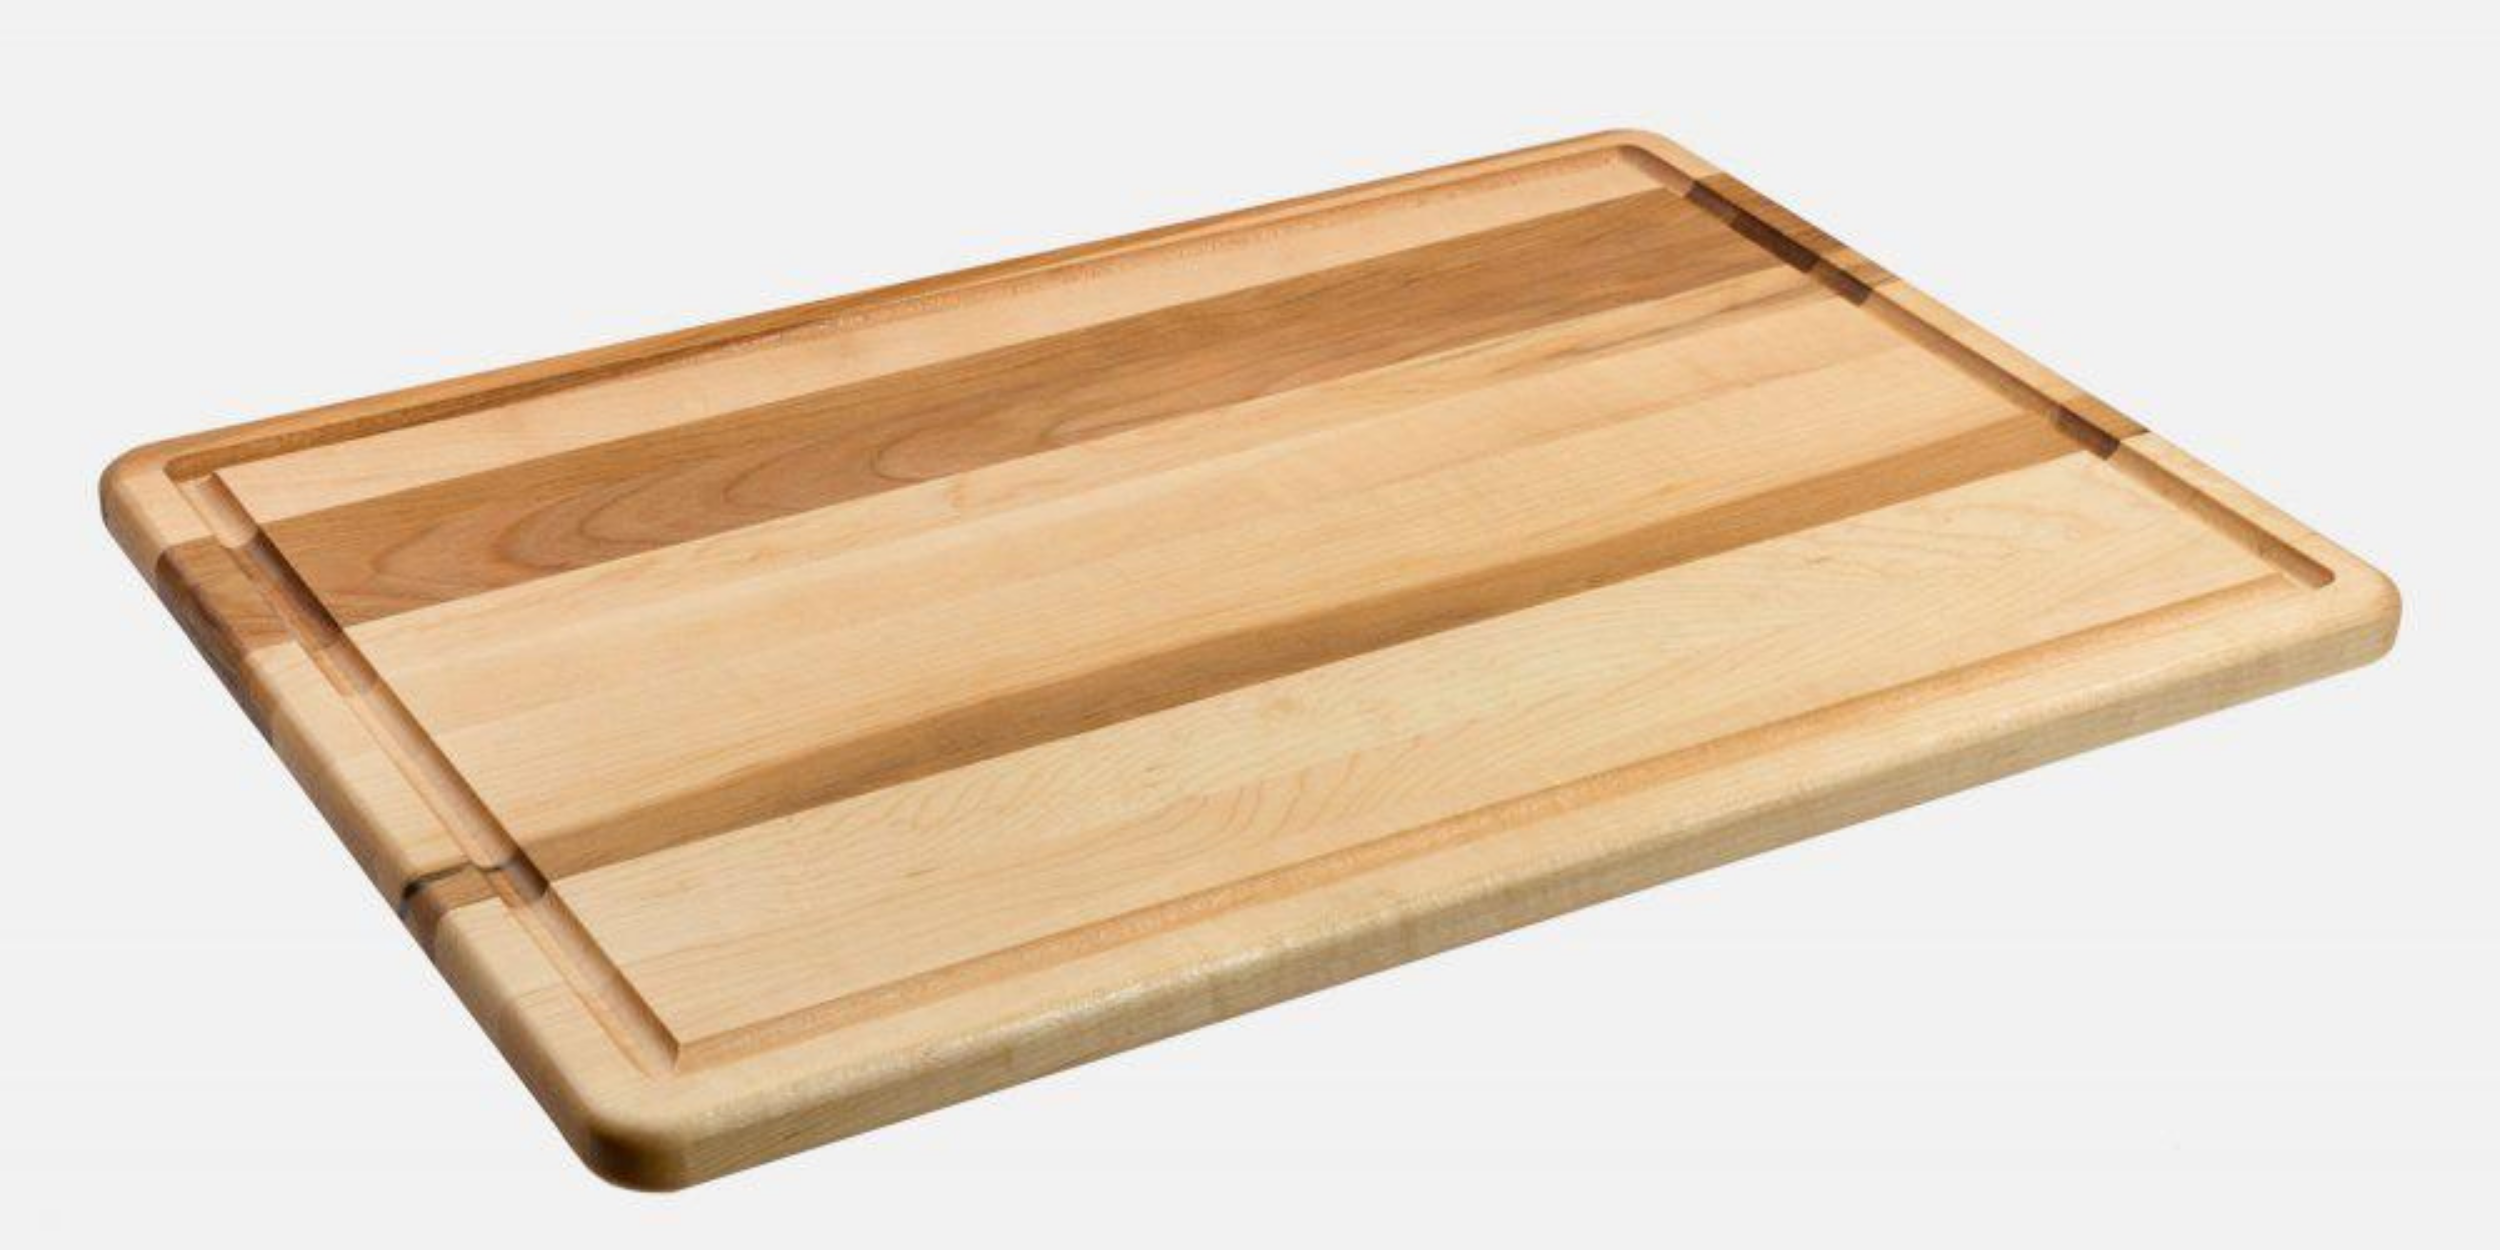 Edge grain maple cutting board with edge groove